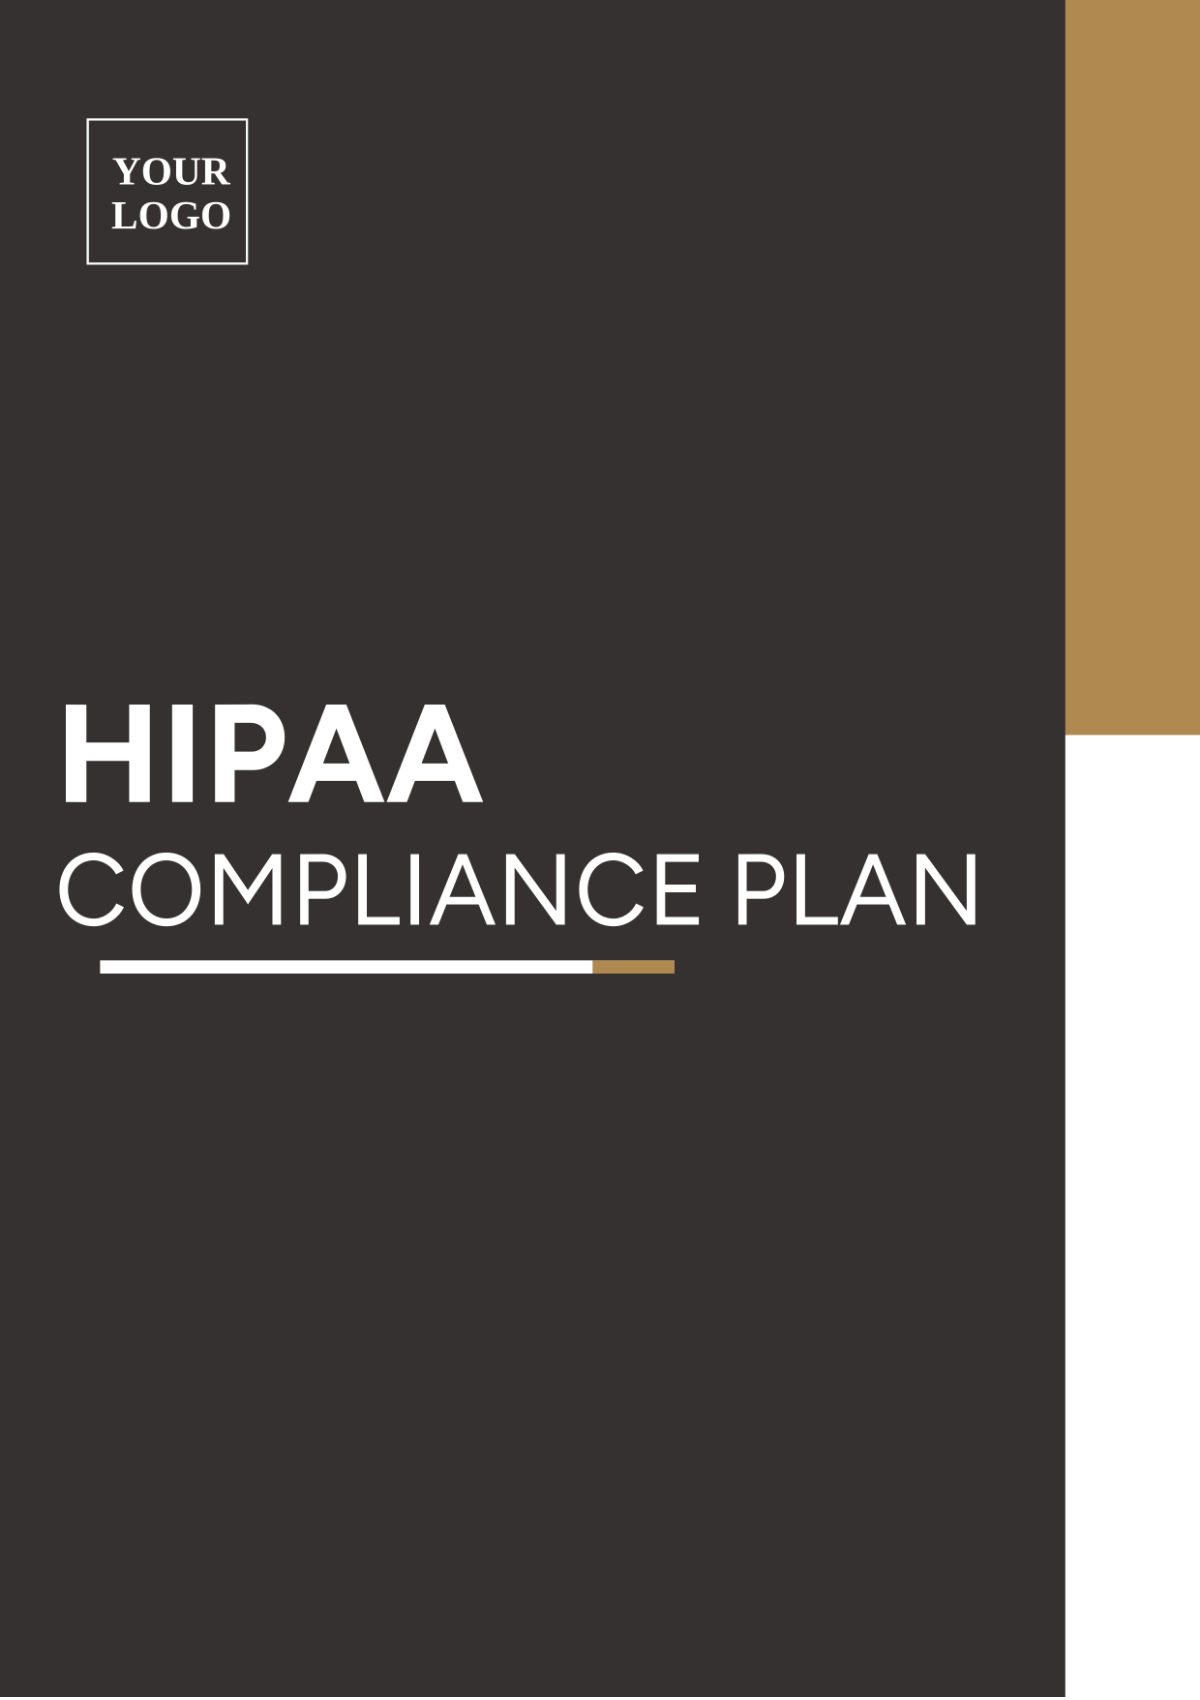 HIPAA Compliance Plan Template